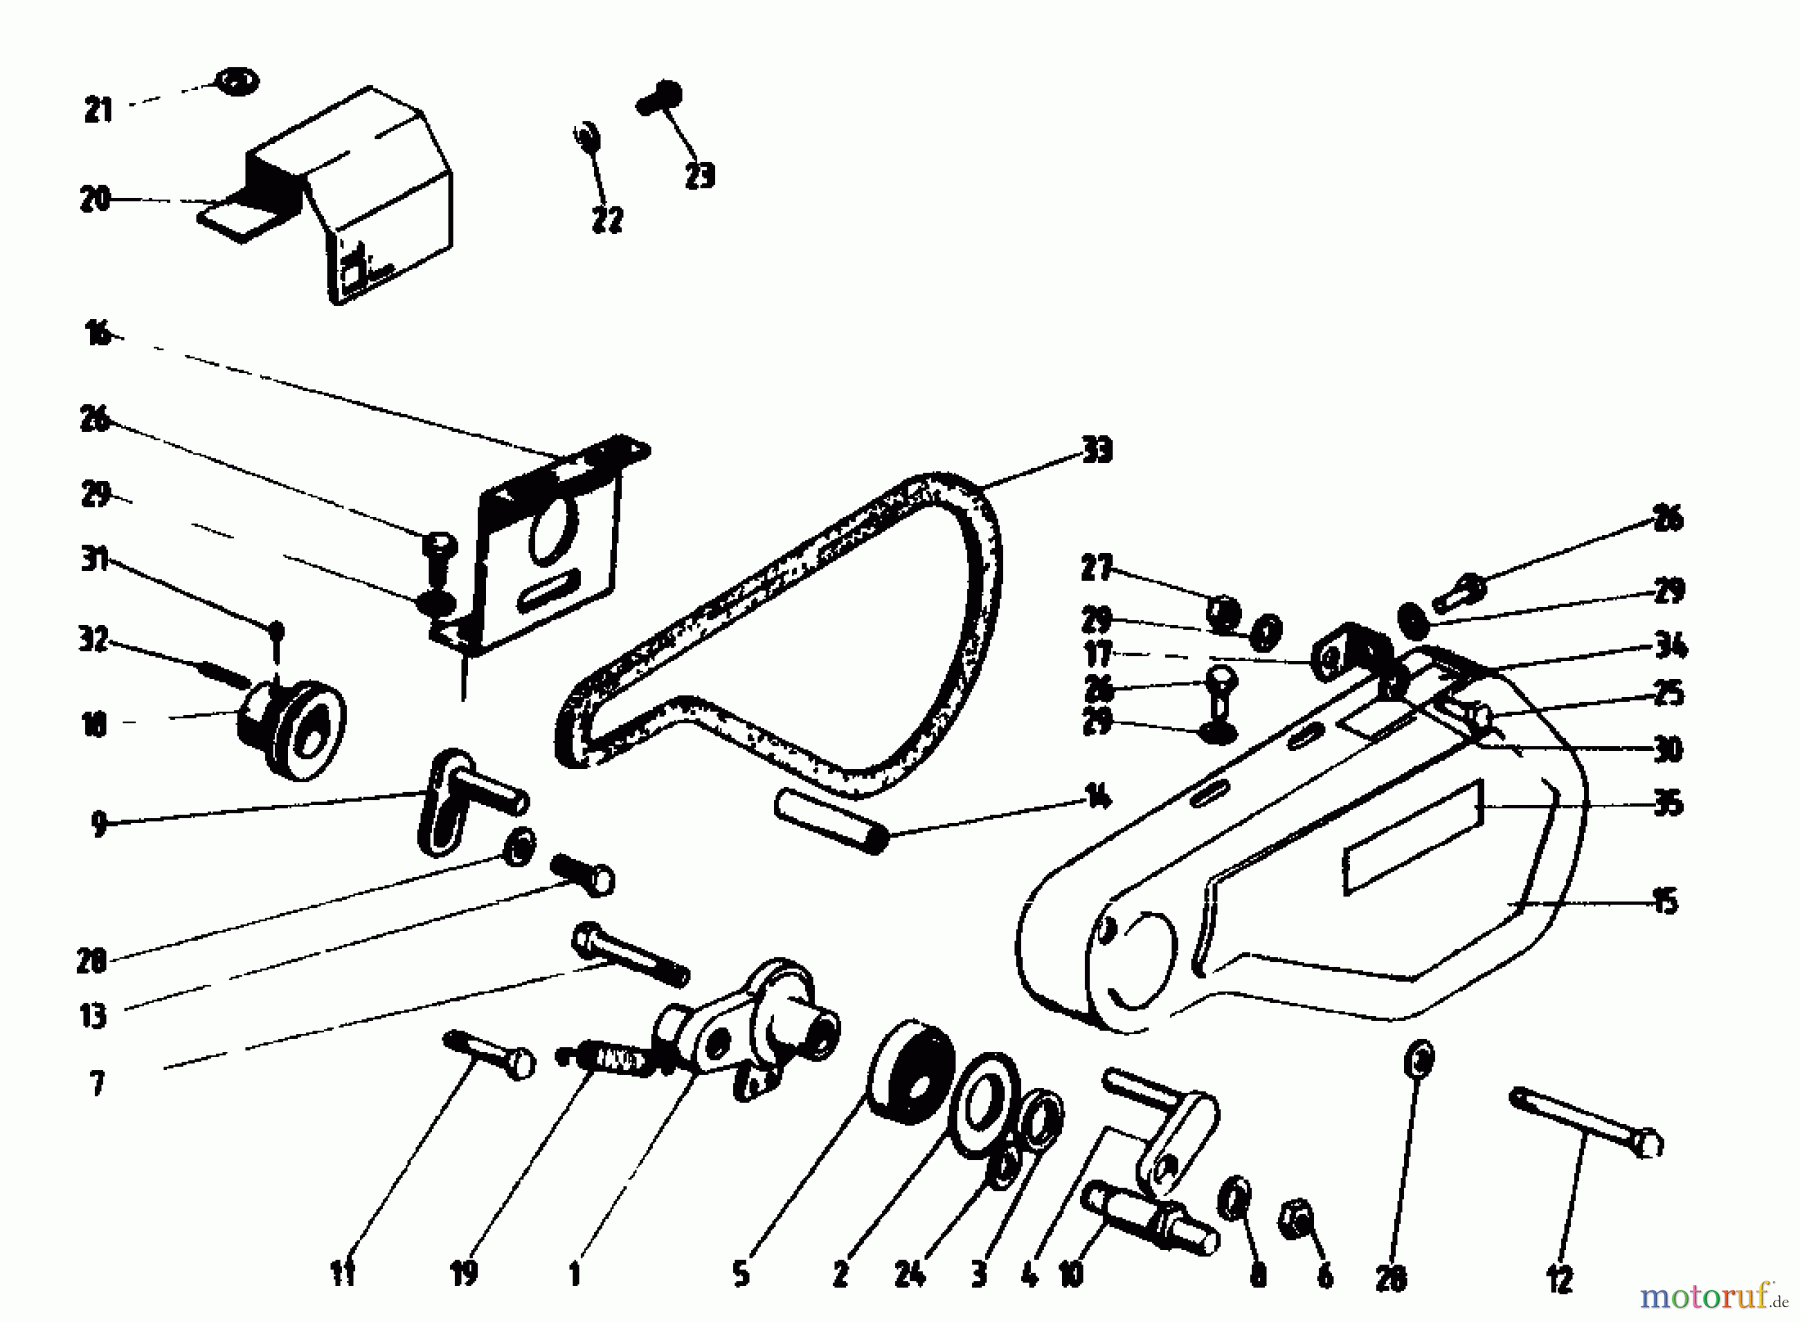  Gutbrod Motobineuse MB 60-30 07514.01  (1989) Entraînement de roulement